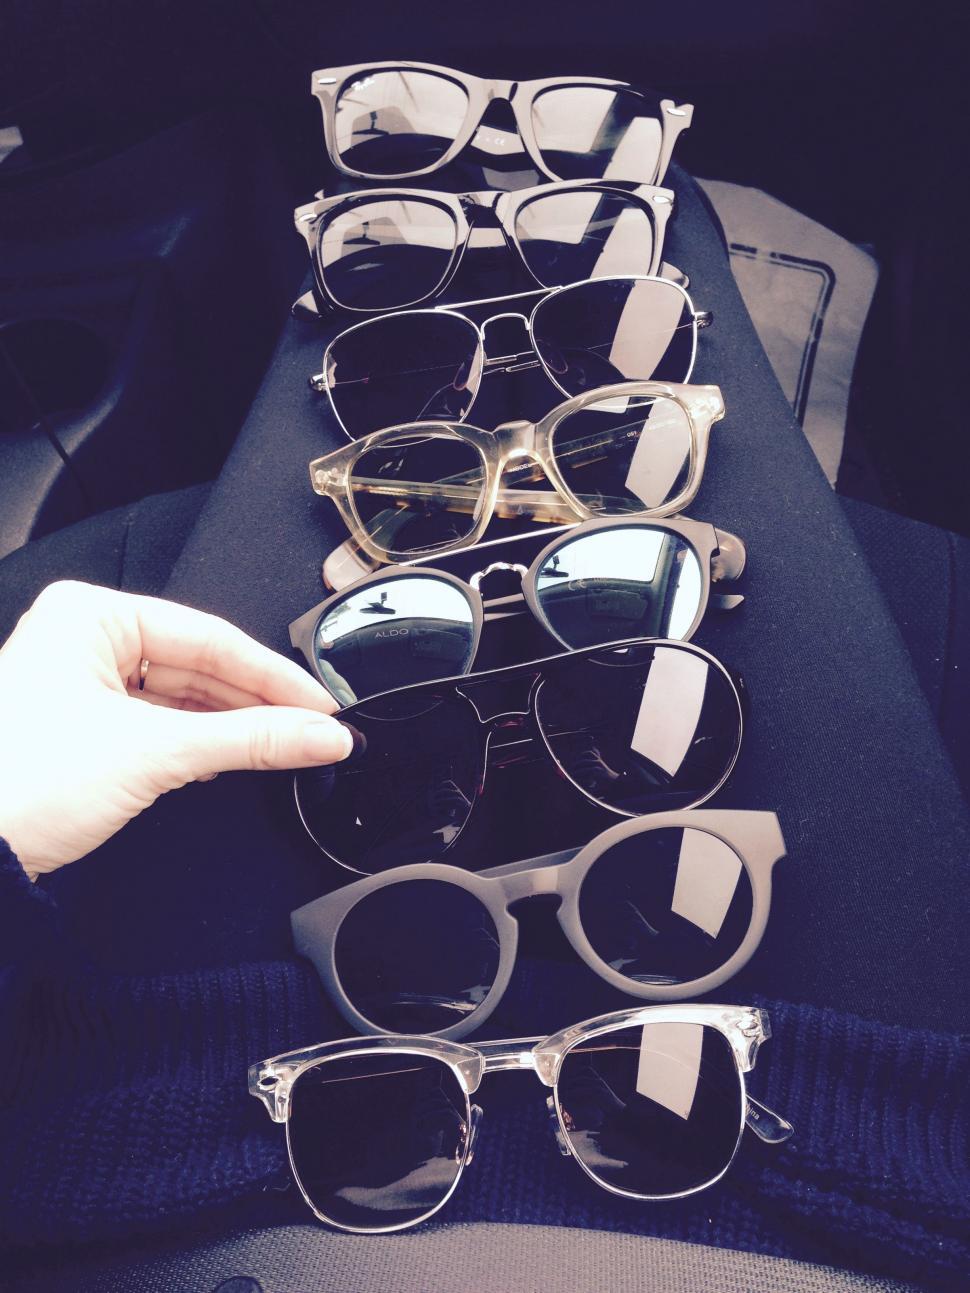 Free Image of Row of Sunglasses  